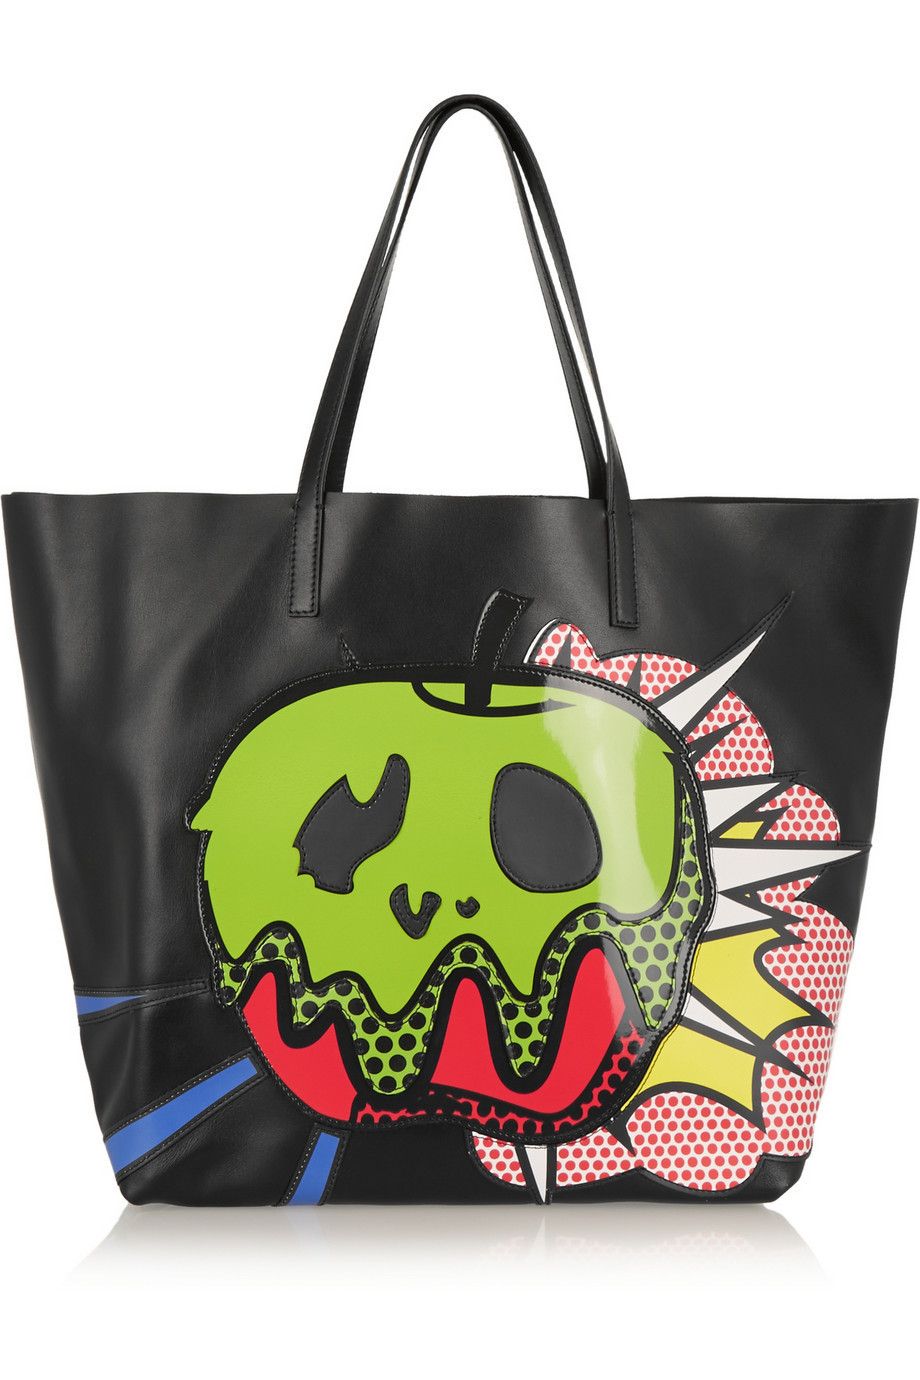 Bag, Shoulder bag, Luggage and bags, Shopping bag, Material property, Tote bag, Label, Design, Brand, Fruit, 